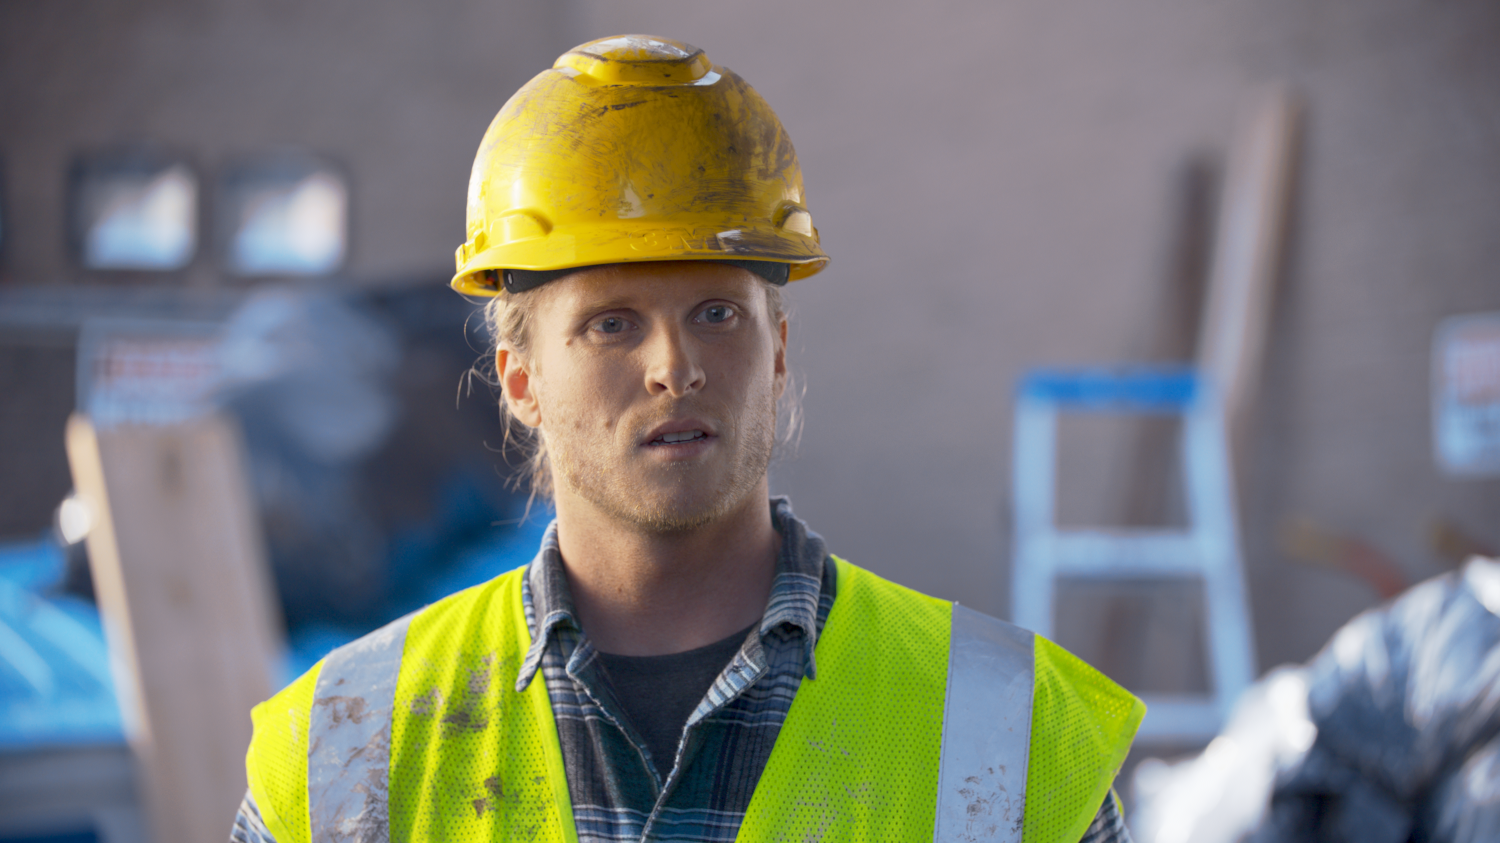 Closeup of a construction worker